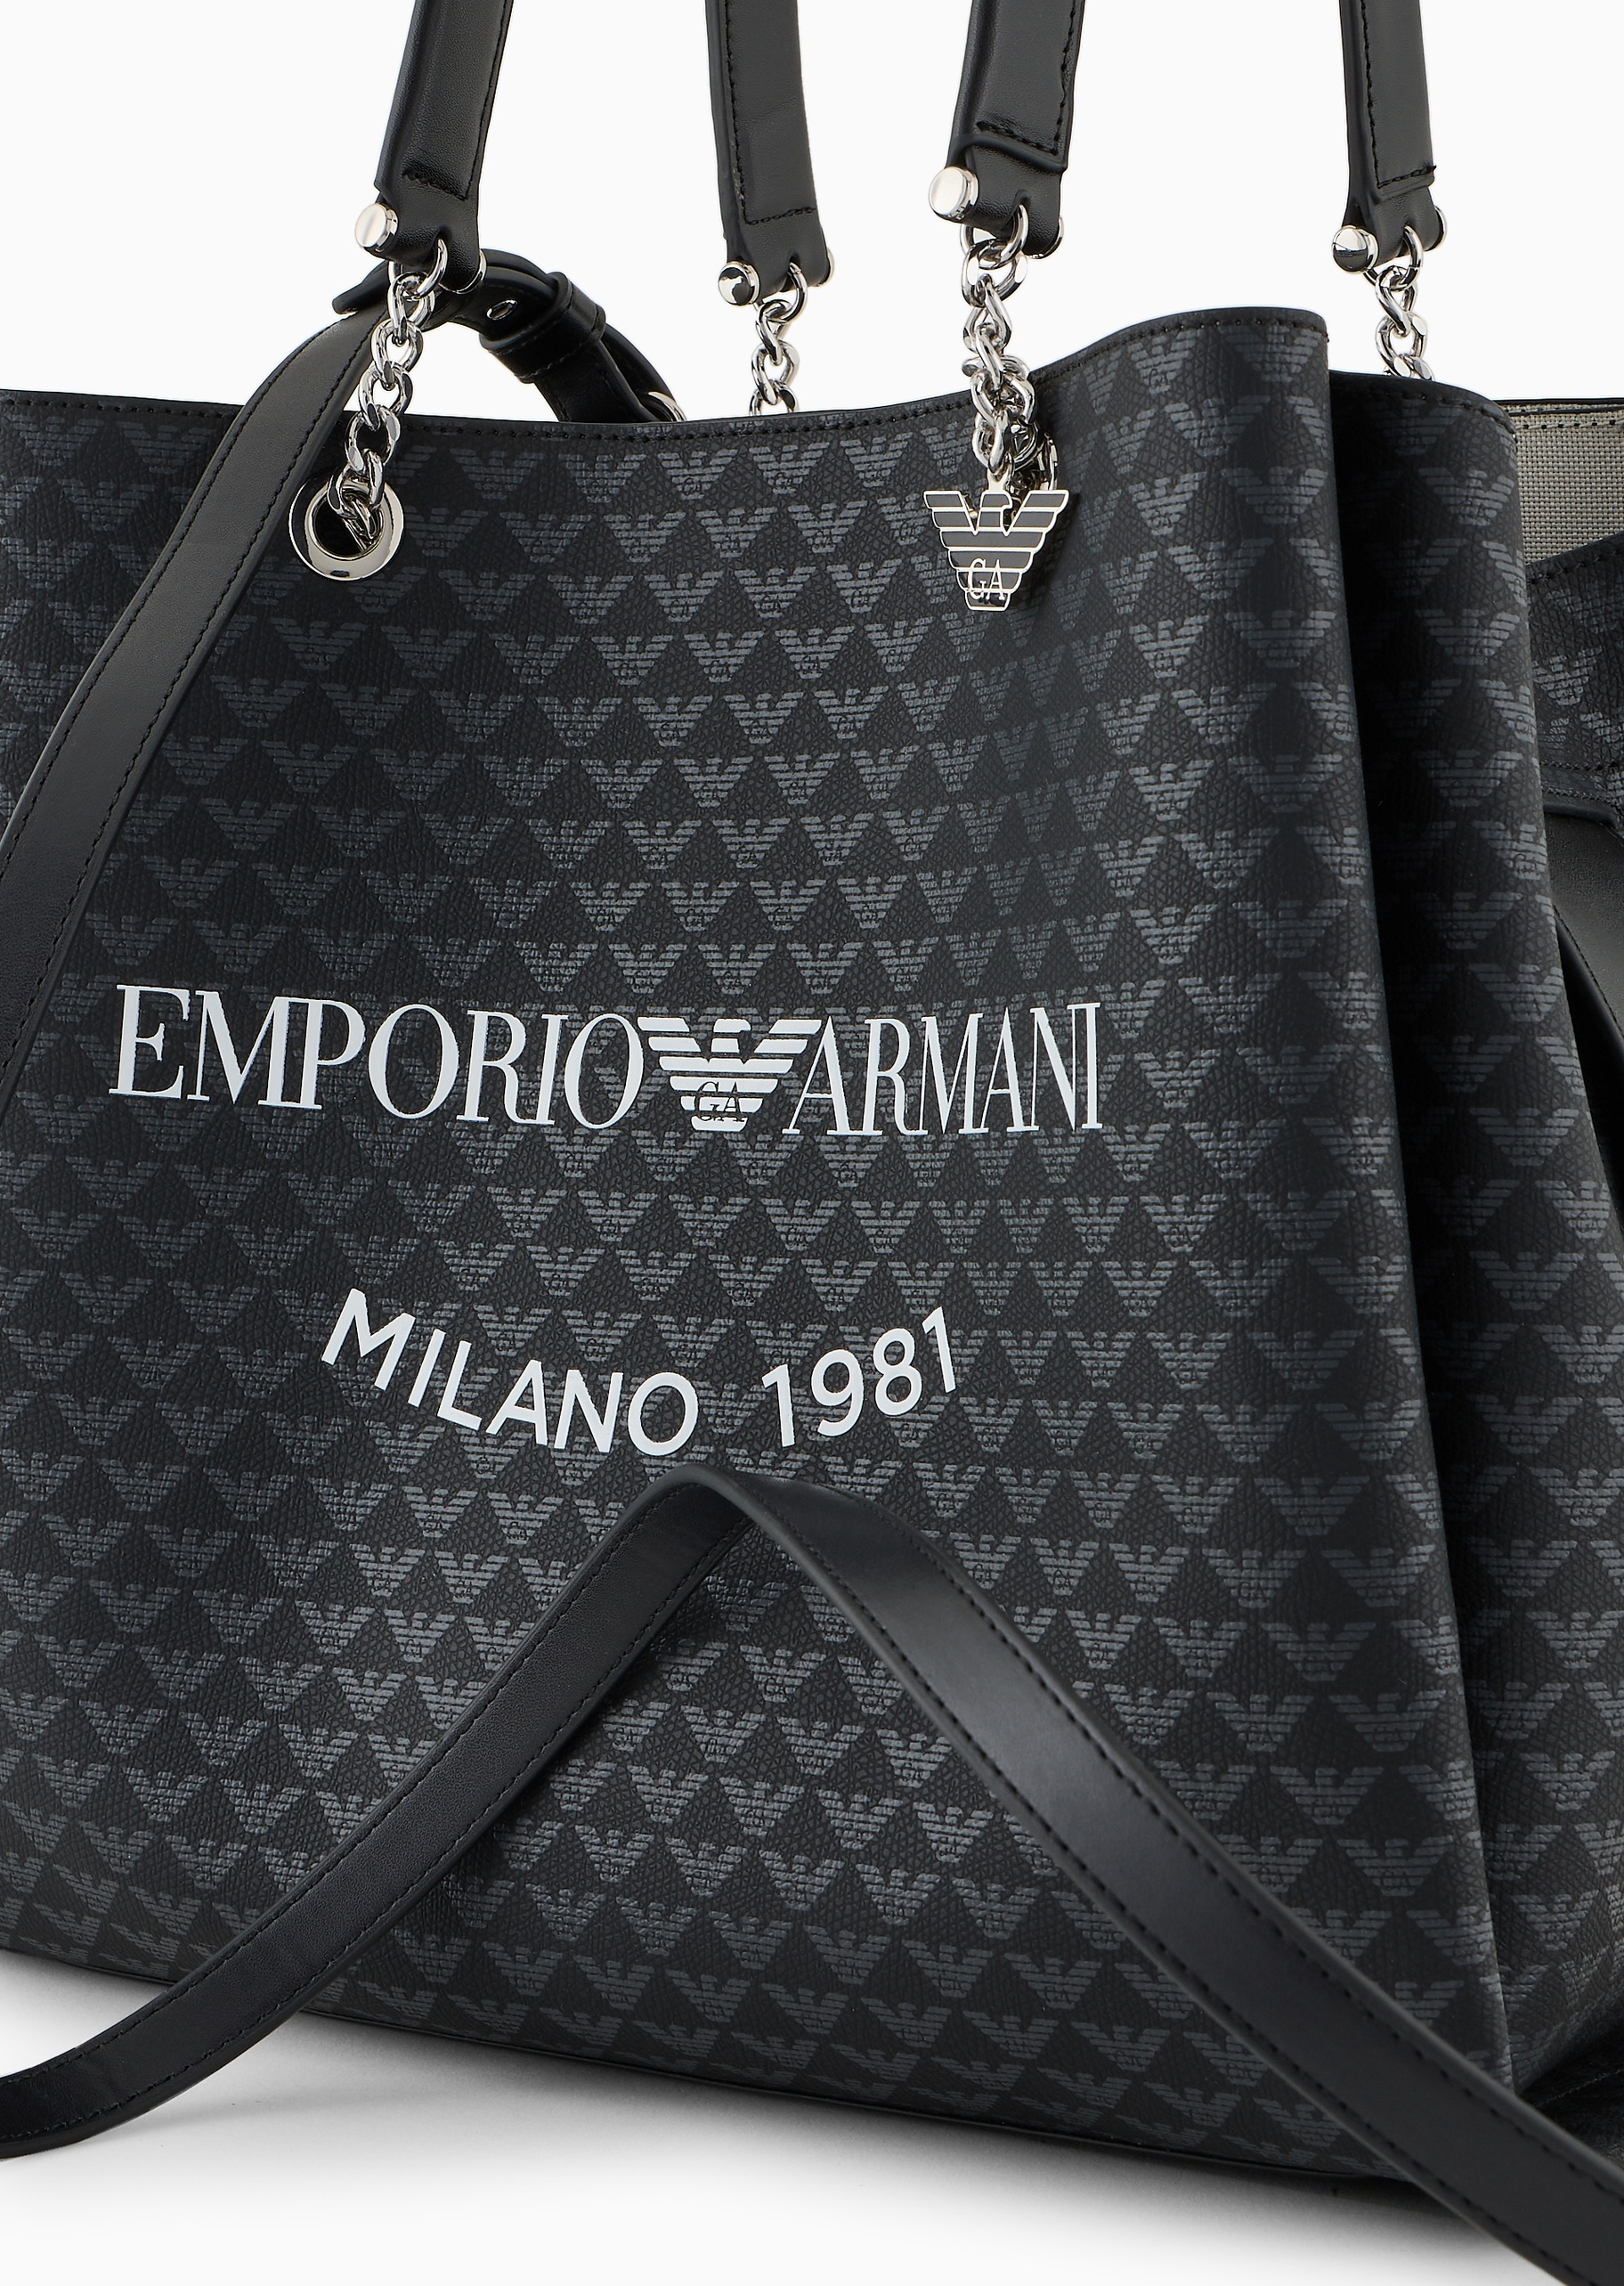 Emporio Armani 女士磁扣子母包大容量手提斜挎托特包